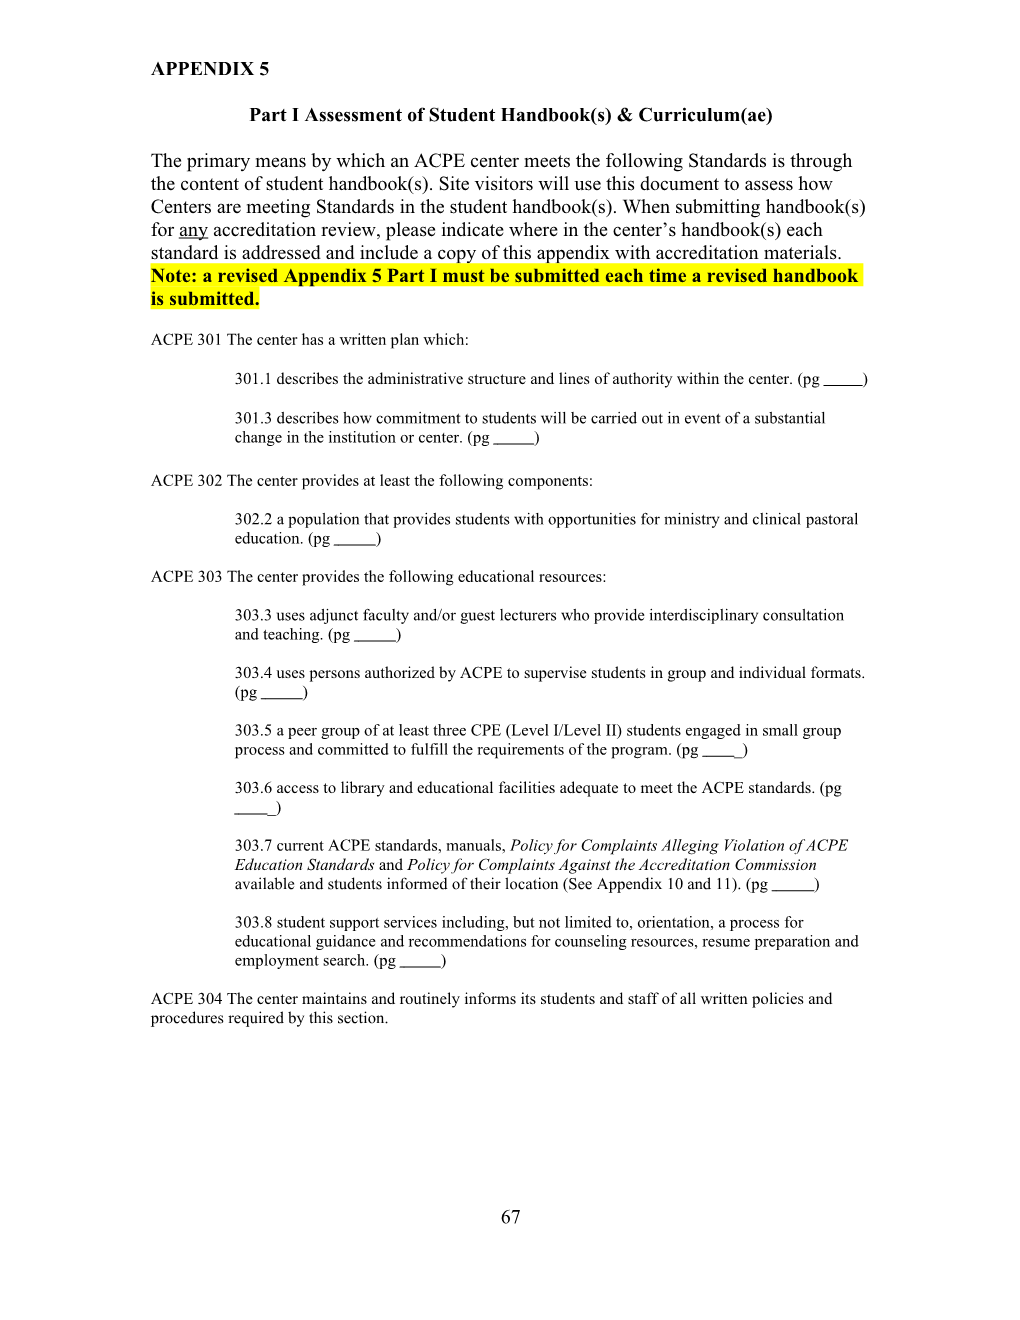 Part I Assessment of Student Handbook(S) & Curriculum(Ae)